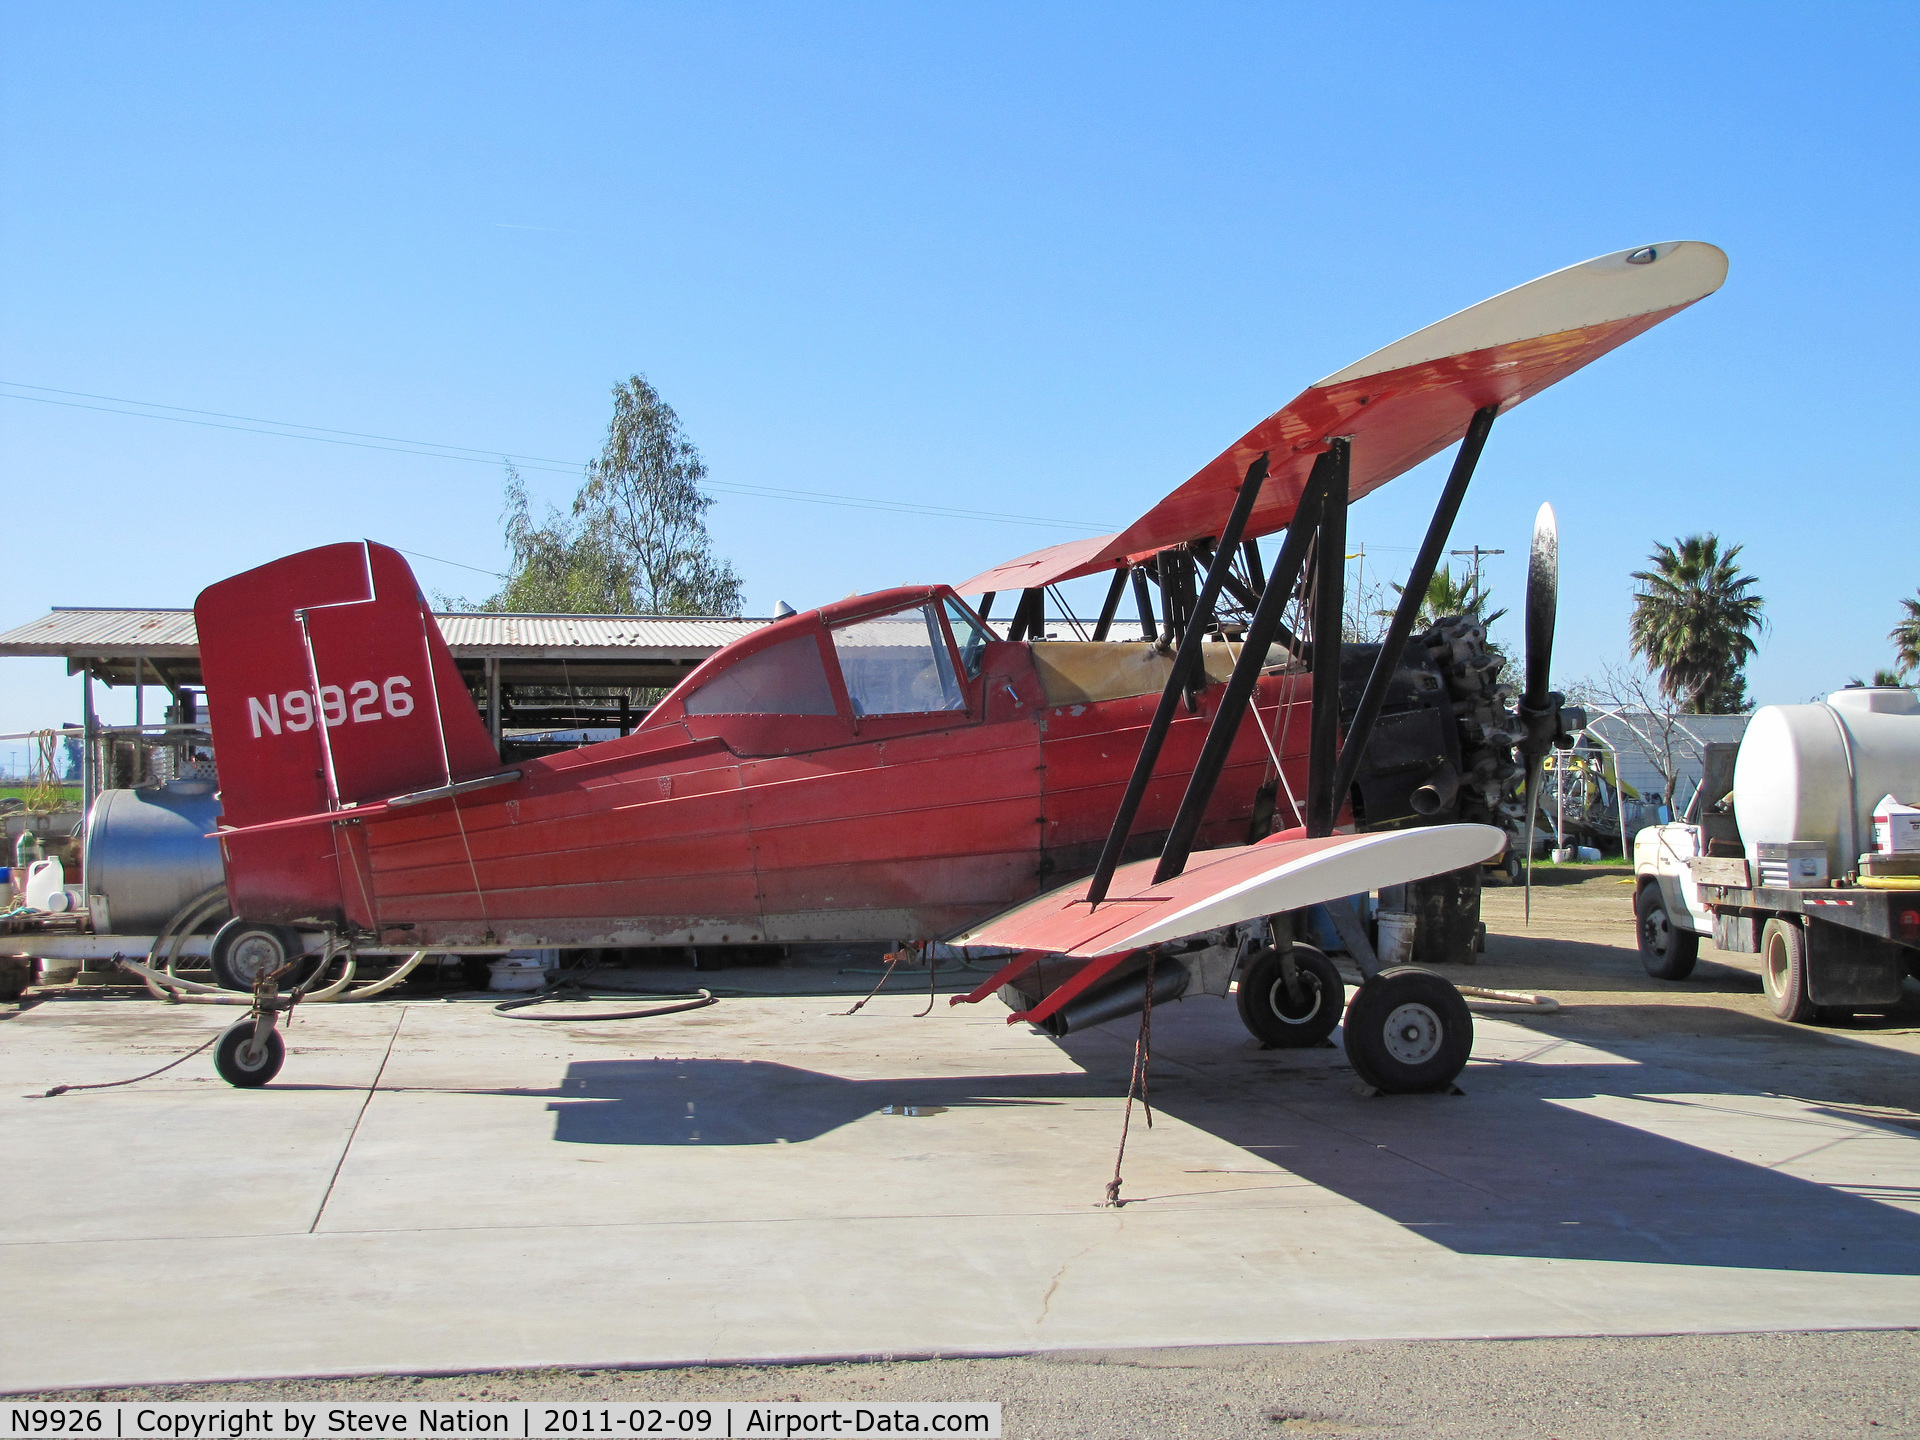 N9926, 1974 Grumman-Schweizer G-164A C/N 1334, Hughes Flying Service (Riverdale, CA) dark red 1974 G-164A rigged for spreading dry material @ Brian Hughes' airstrip